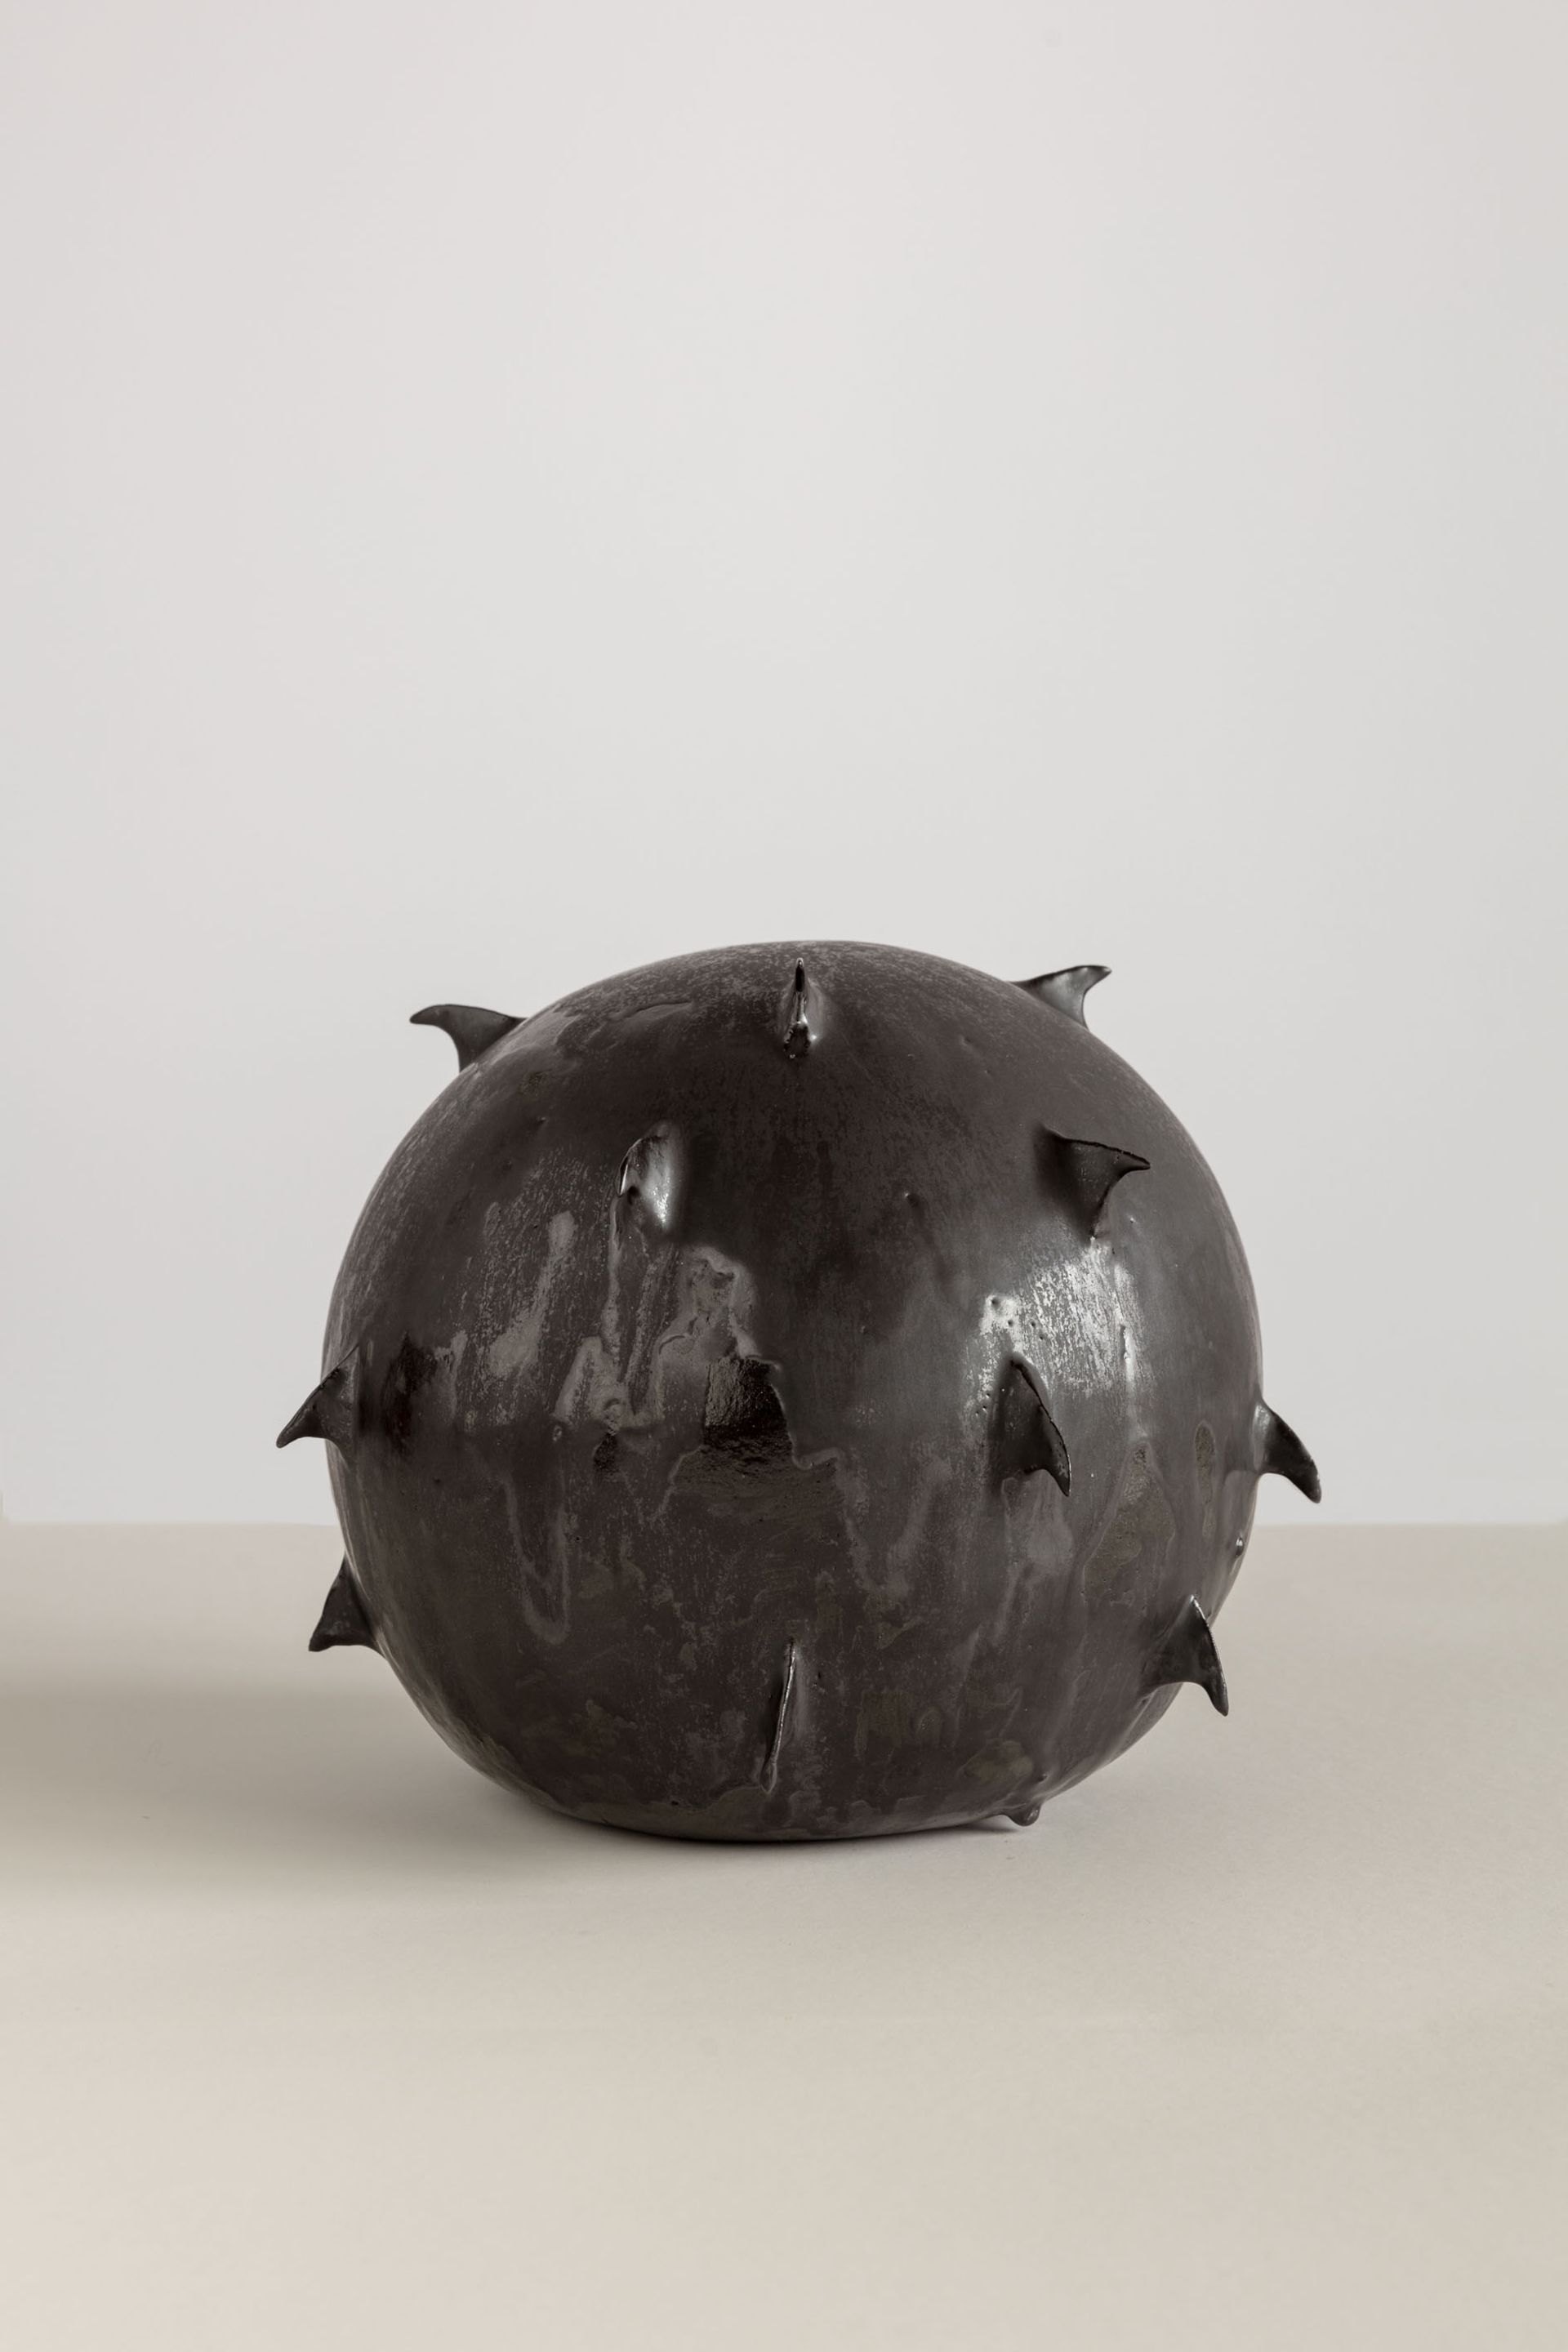 Veronika Hilger, Untitled / ohne Titel, 2020, Ceramic, glazed, 16 × 18 × 18 cm